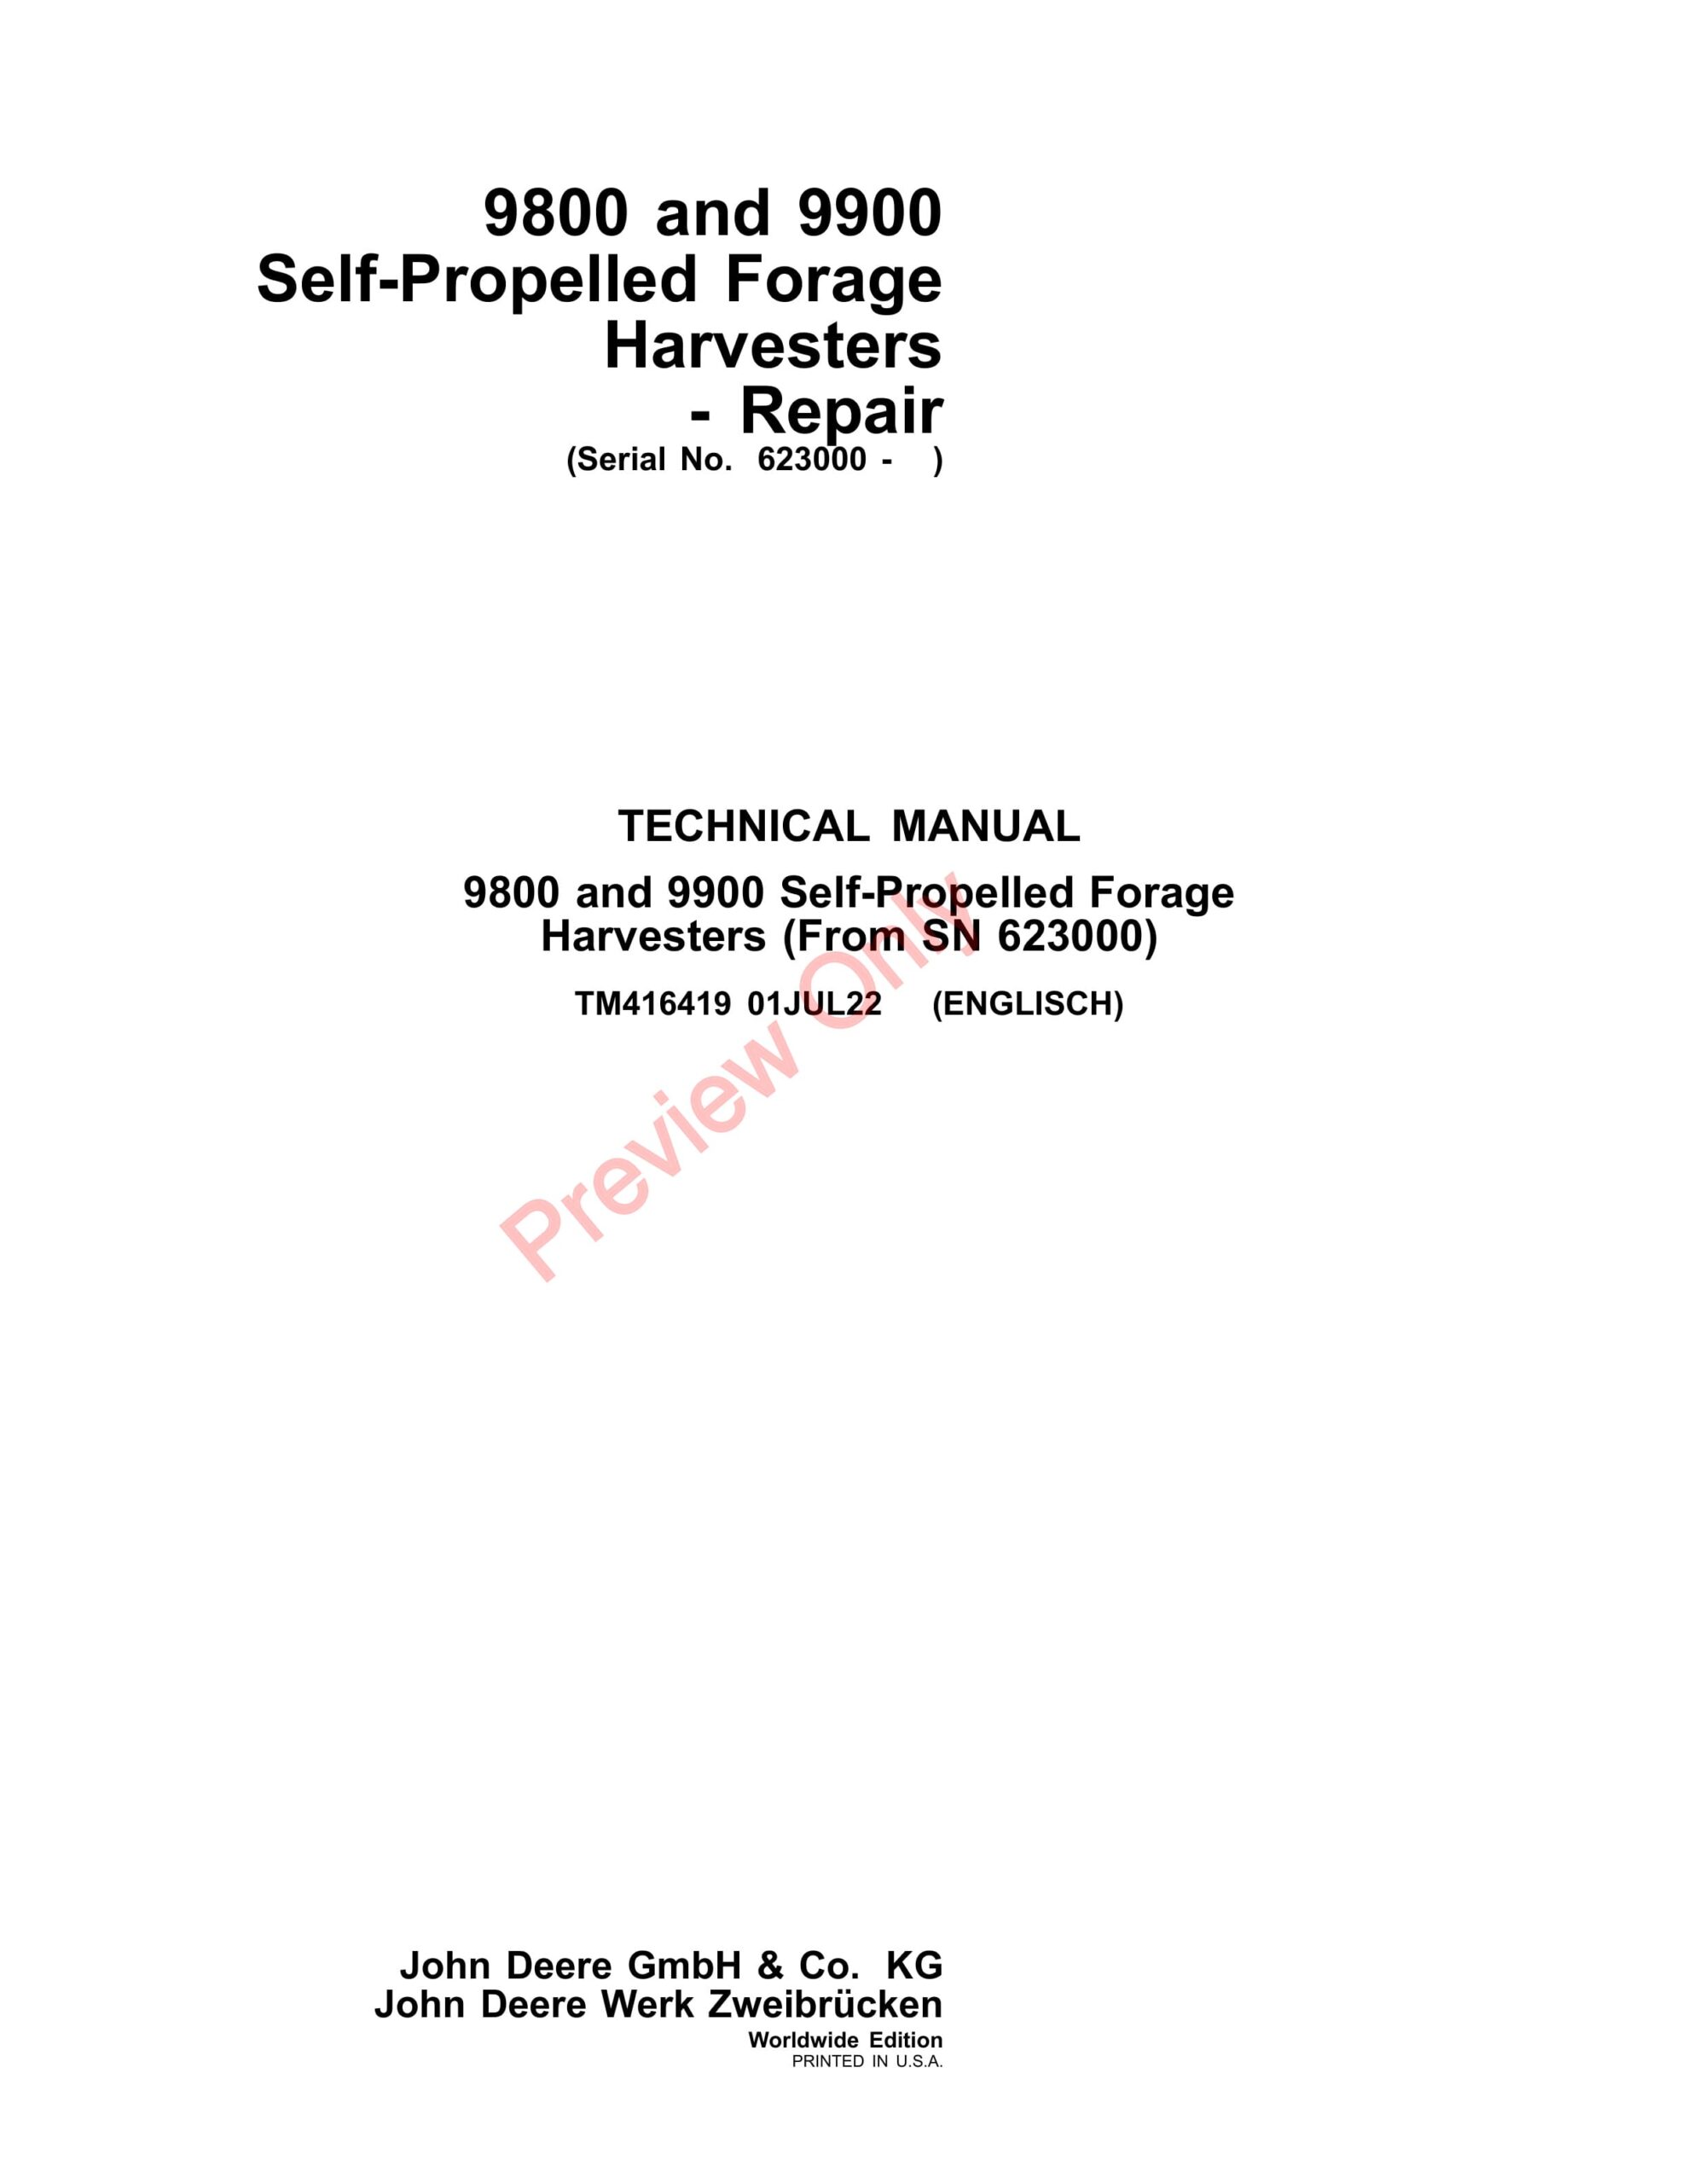 John Deere 9800 and 9900 Self-Propelled Forage Harvesters – (623000-) Technical Manual TM416419 01FEB23-1